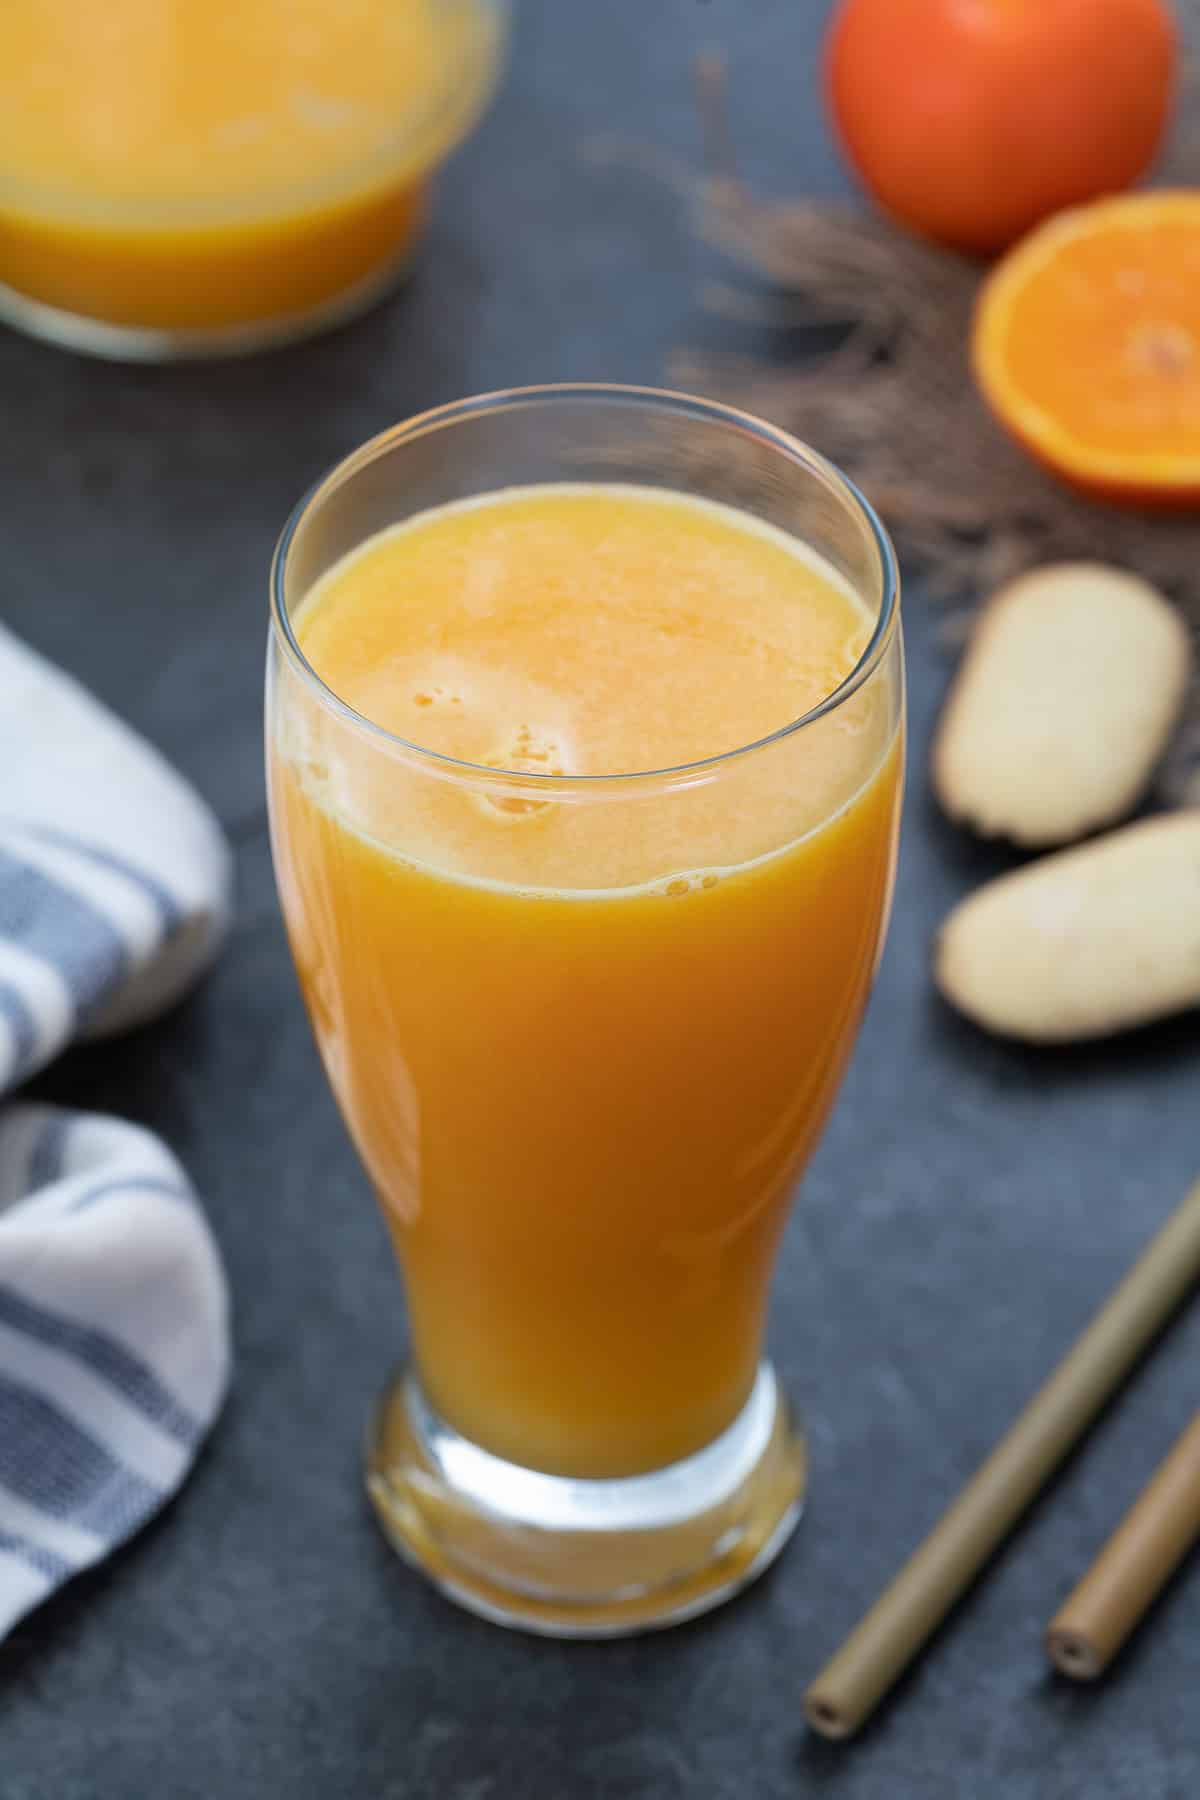 Jugo de naranja servido en un vaso